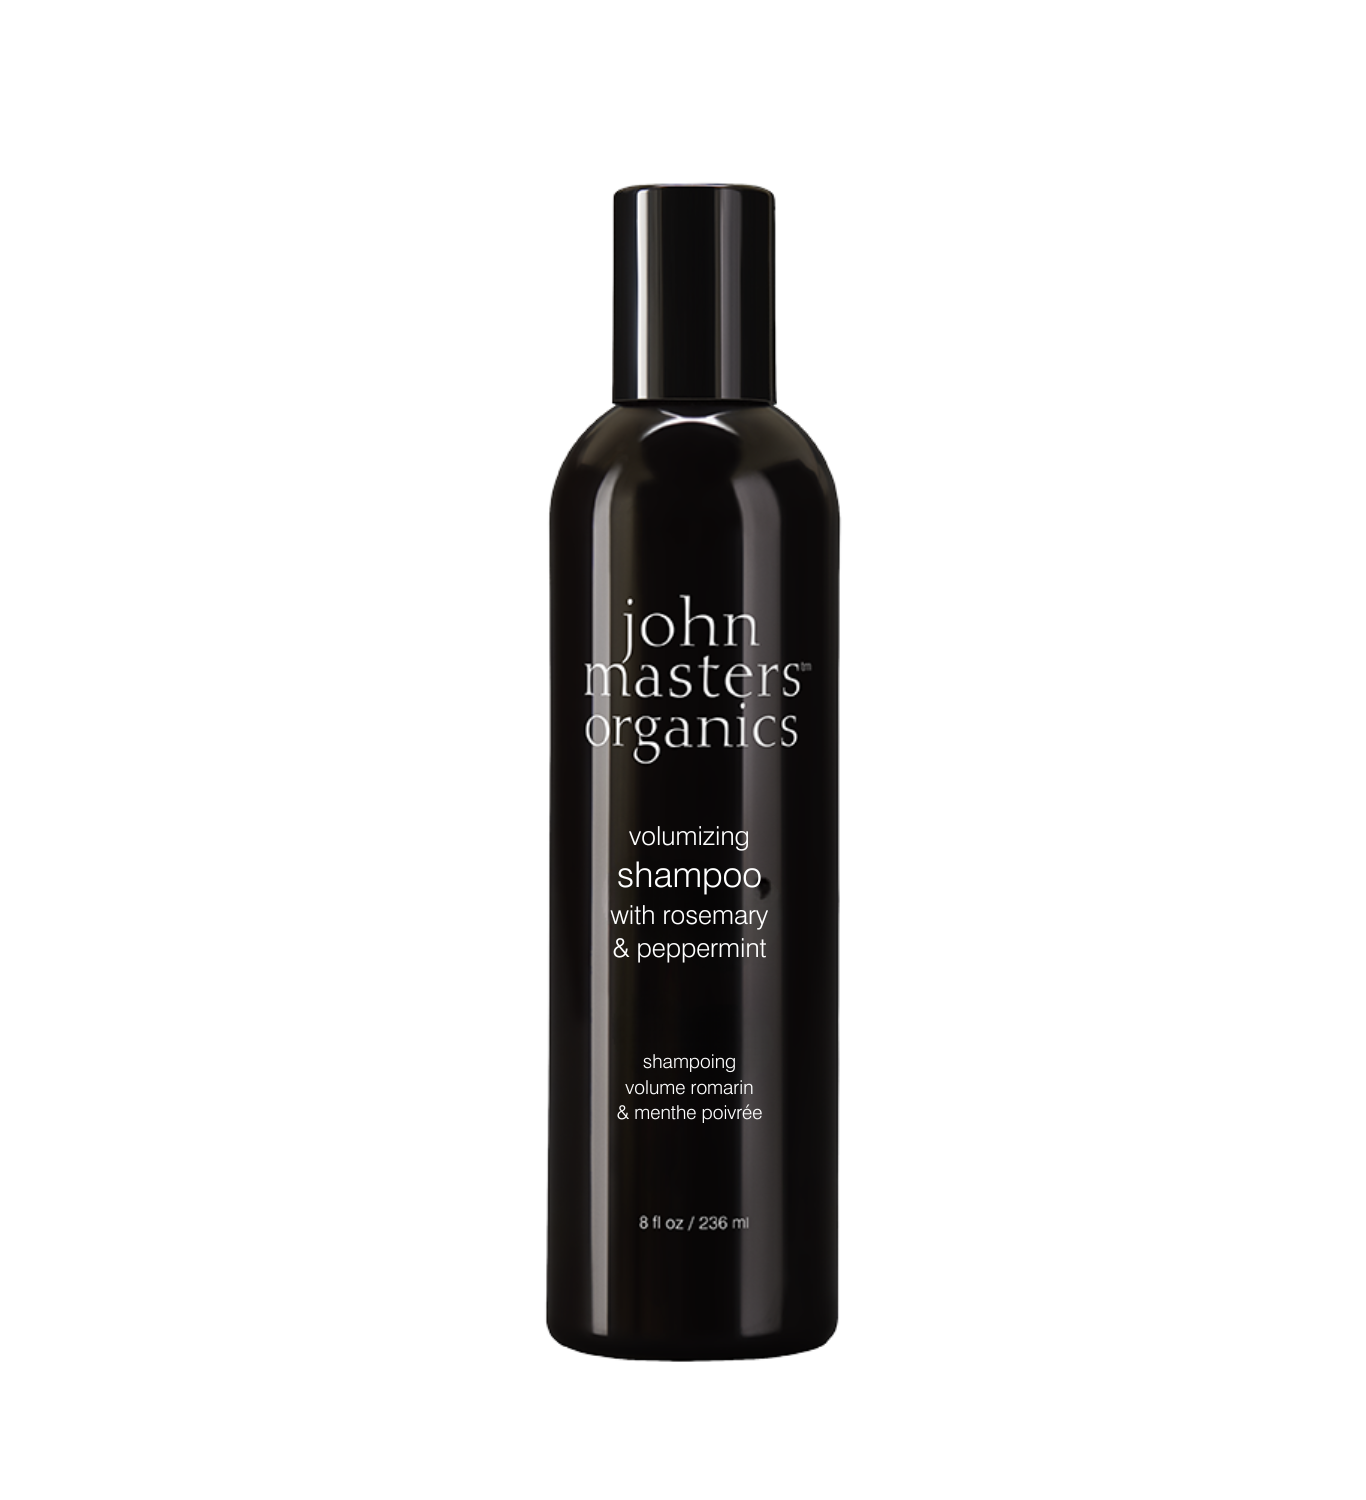 Volumizing Shampoo with Rosemary & Peppermint: 8 oz  236 ml